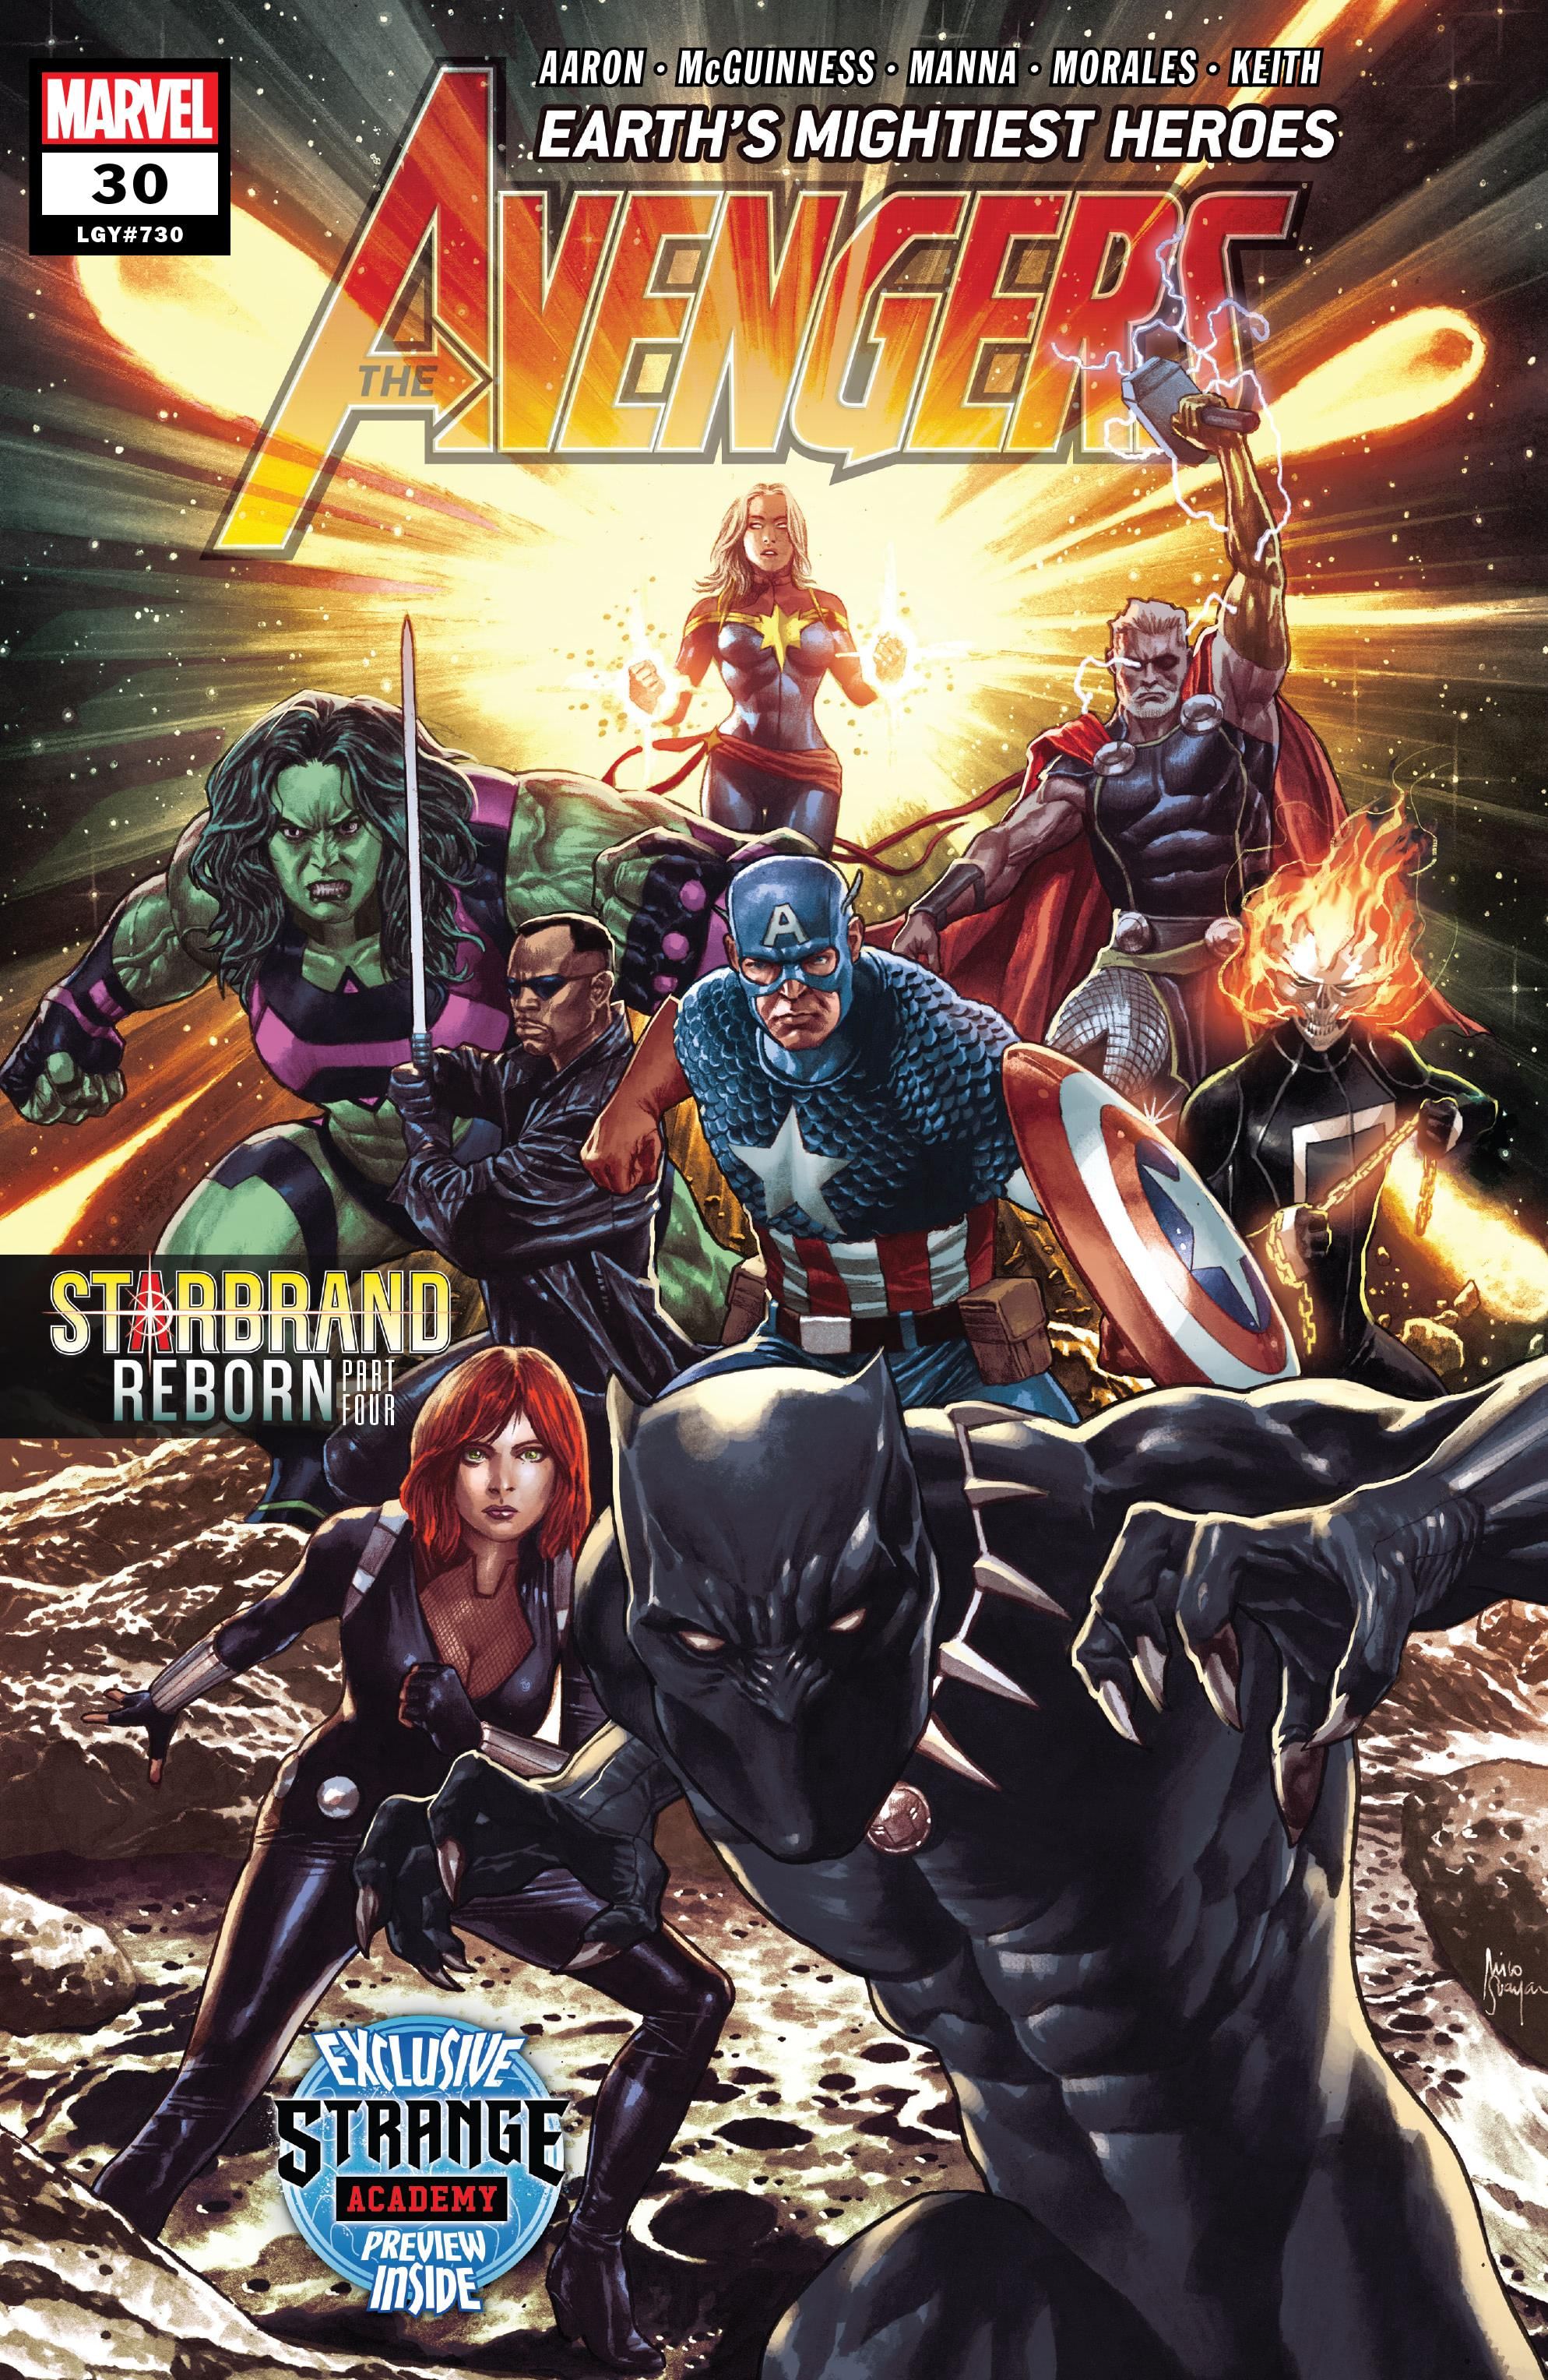 Marvel Comics NEW AVENGERS #30 first printing